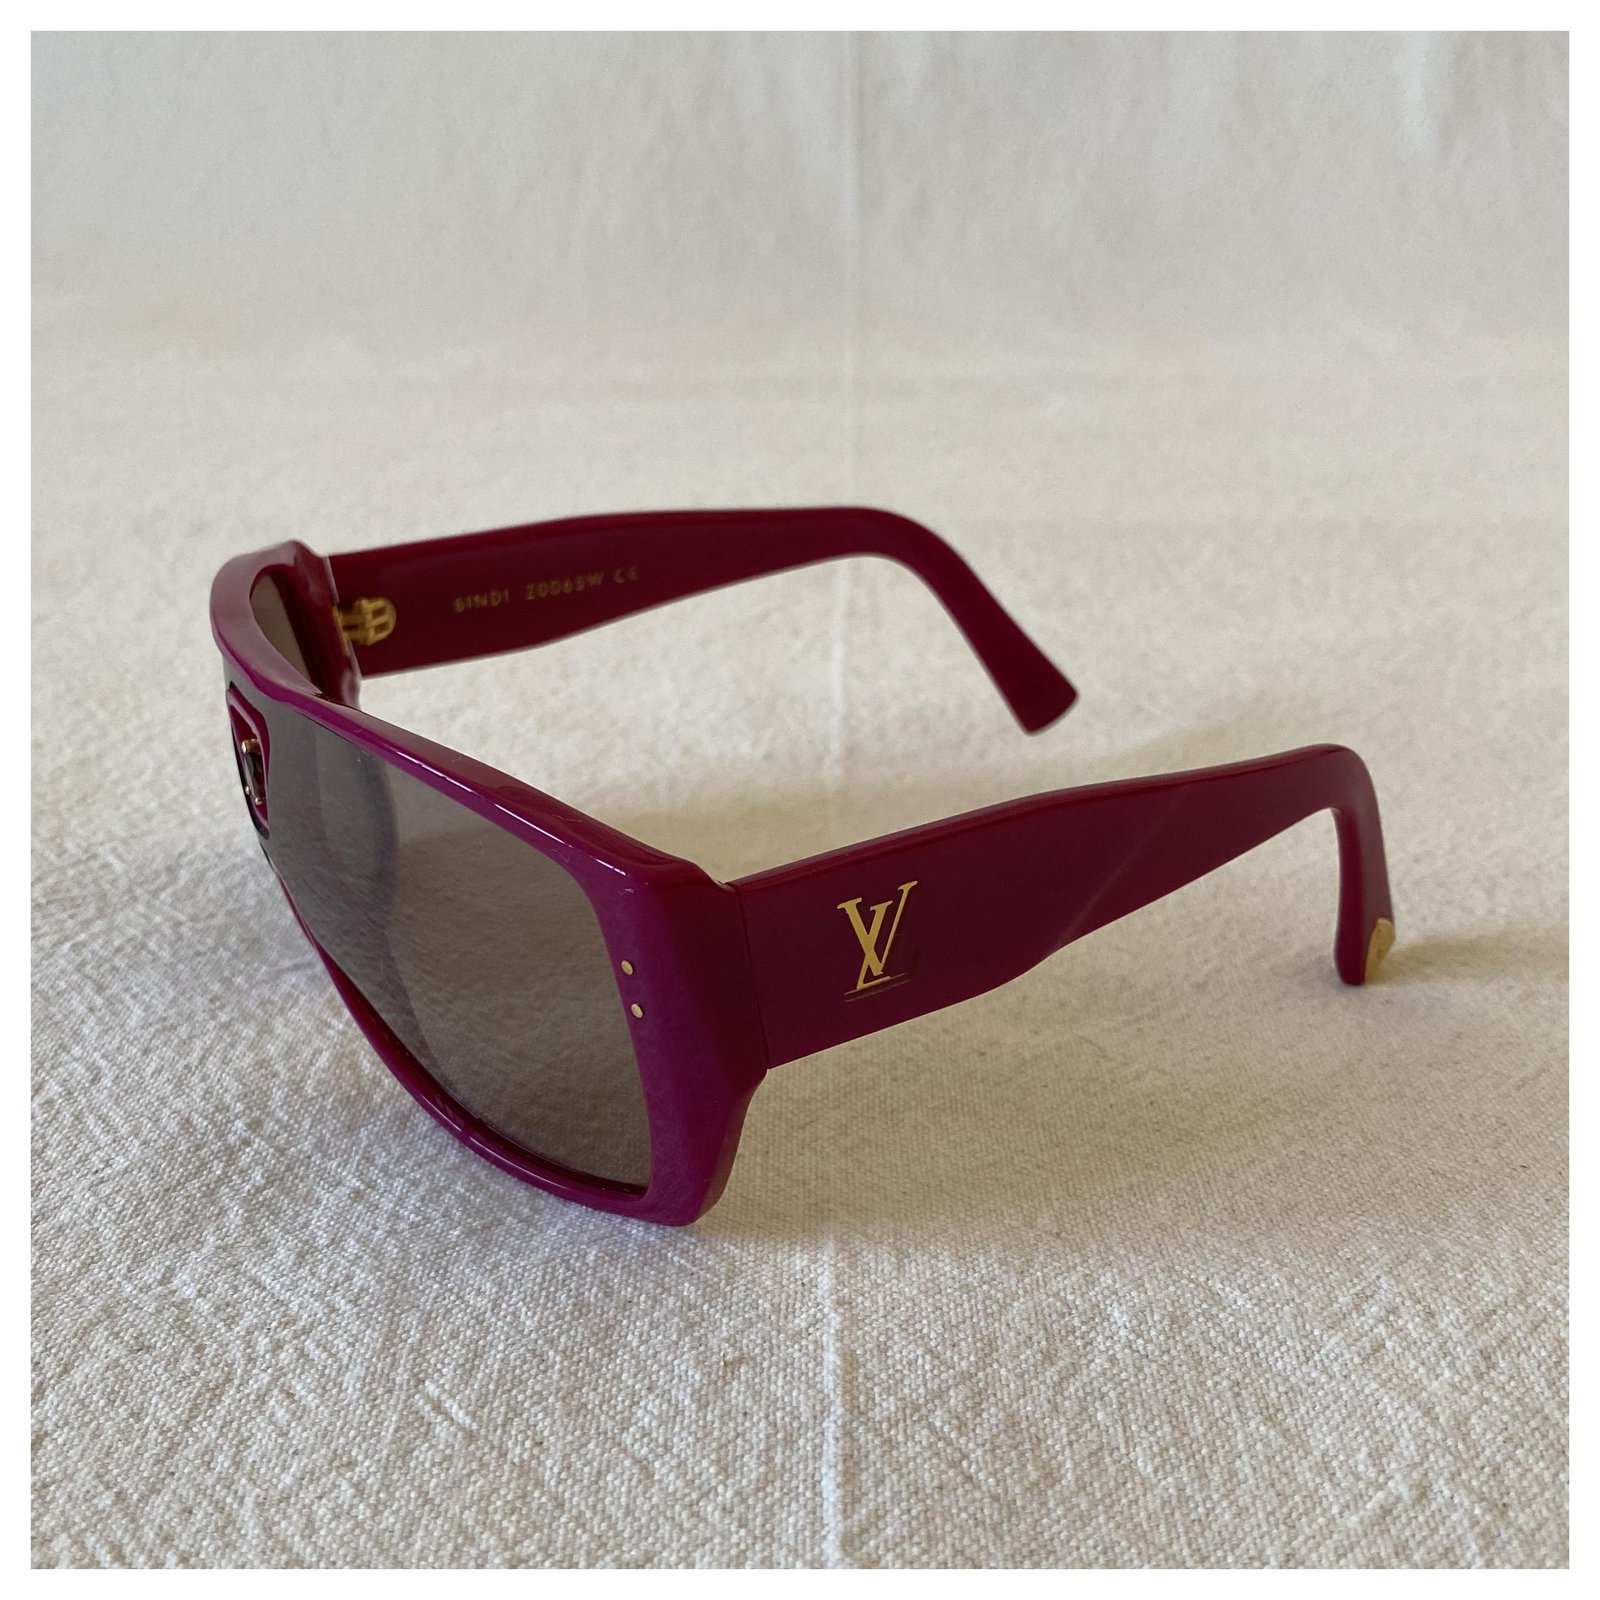 Bindi Sunglasses, Authentic & Vintage